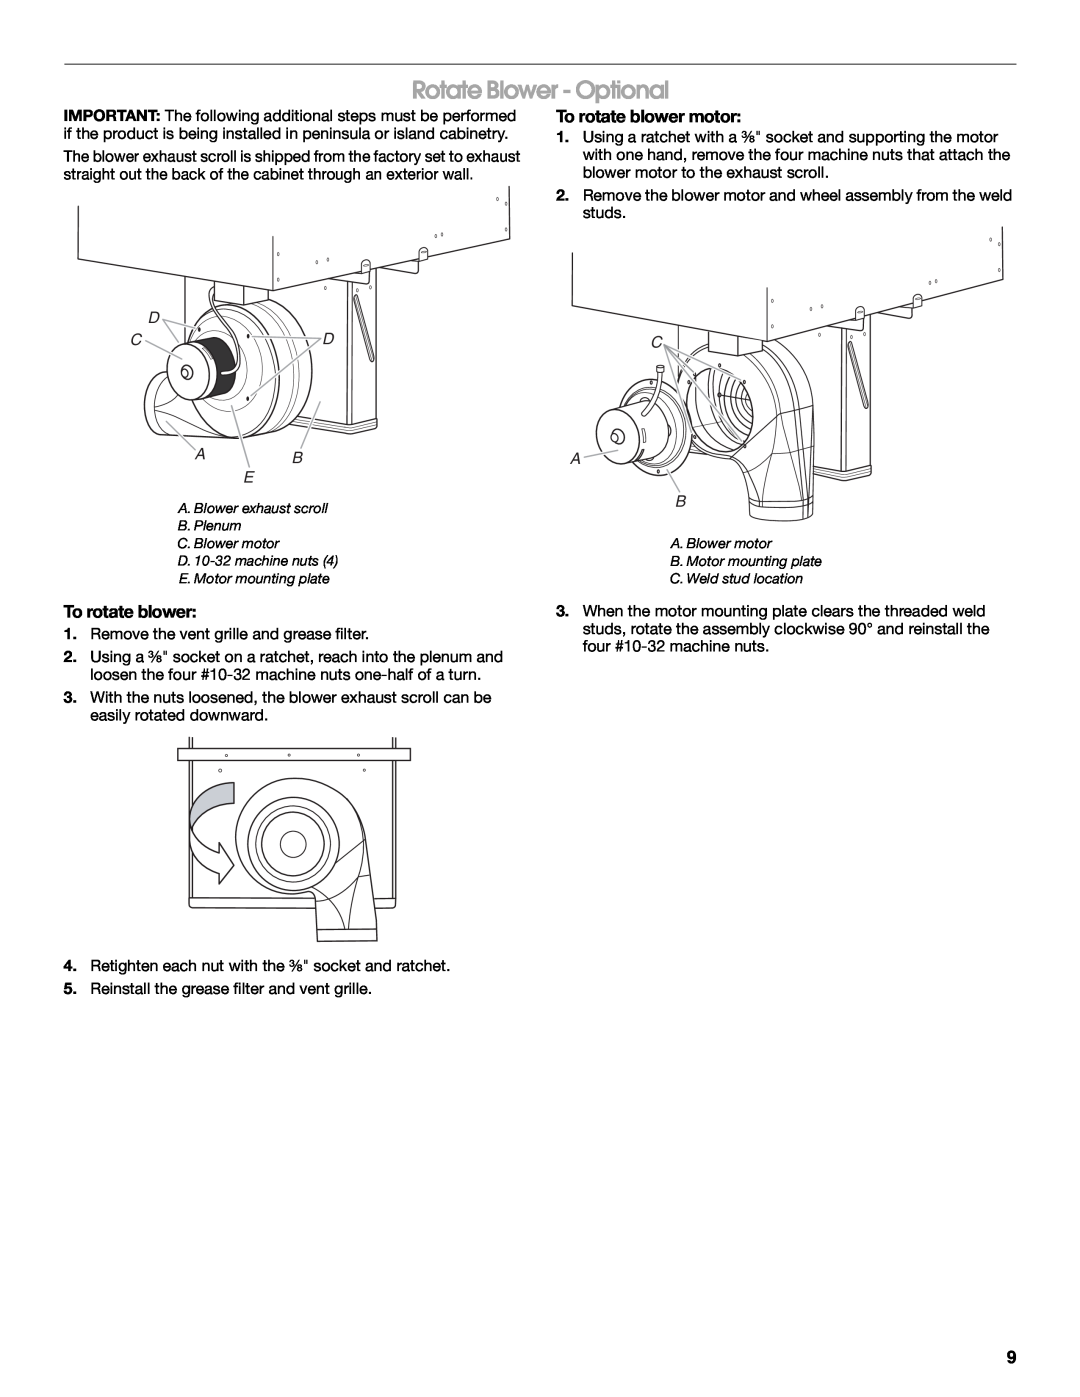 Jenn-Air W10298937B installation instructions Rotate Blower - Optional, To rotate blower motor, D C D Ab E, C A B 